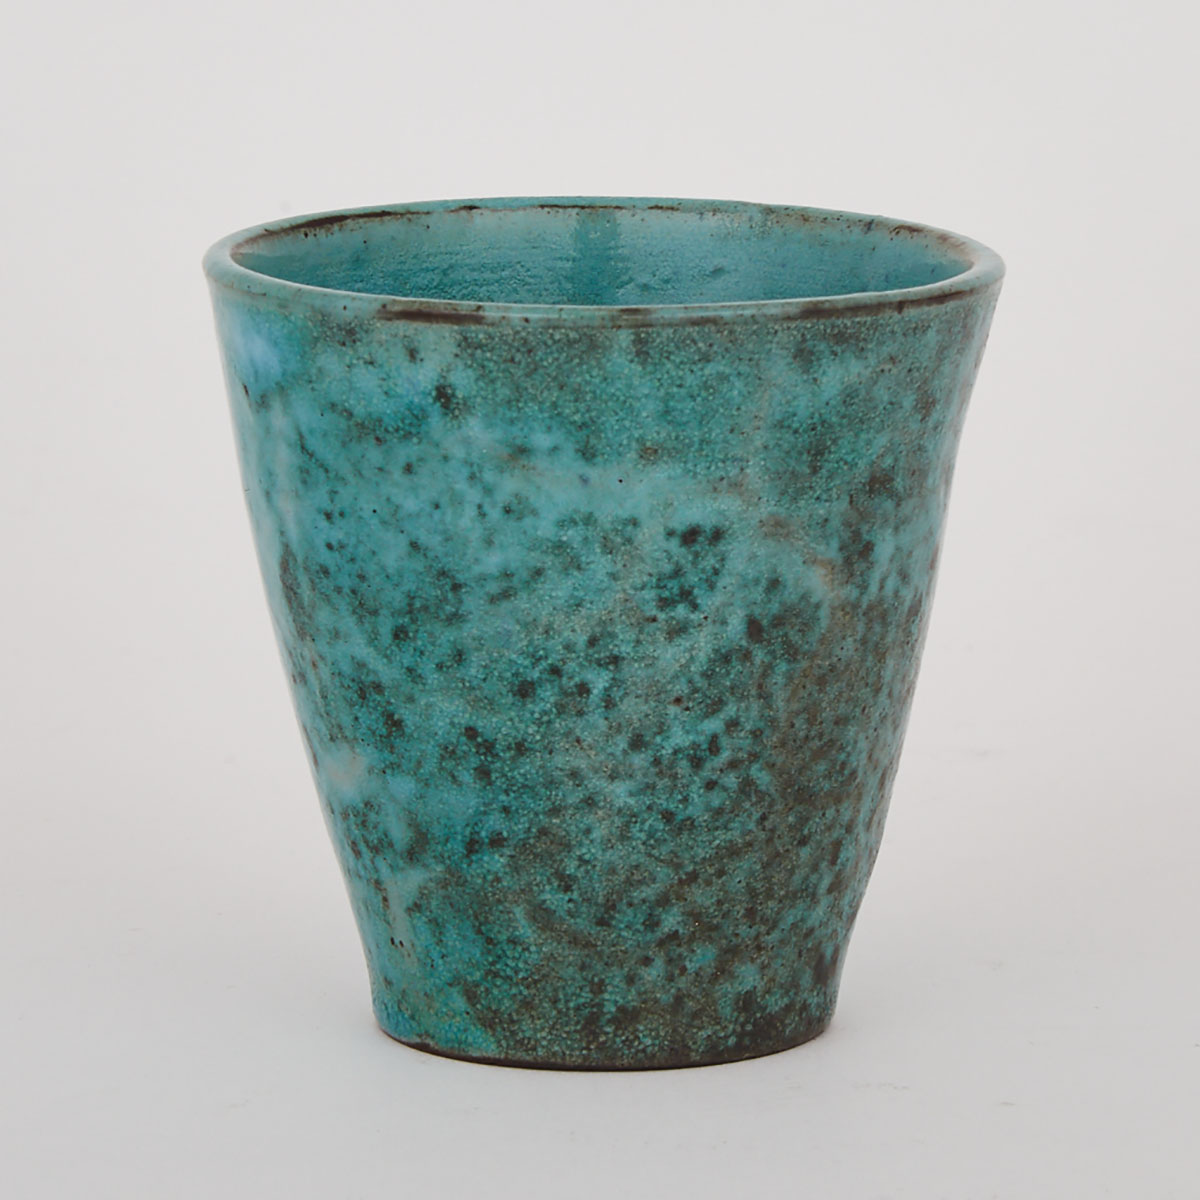 Deichmann Mottled Turquoise Glazed Cup, c.1950